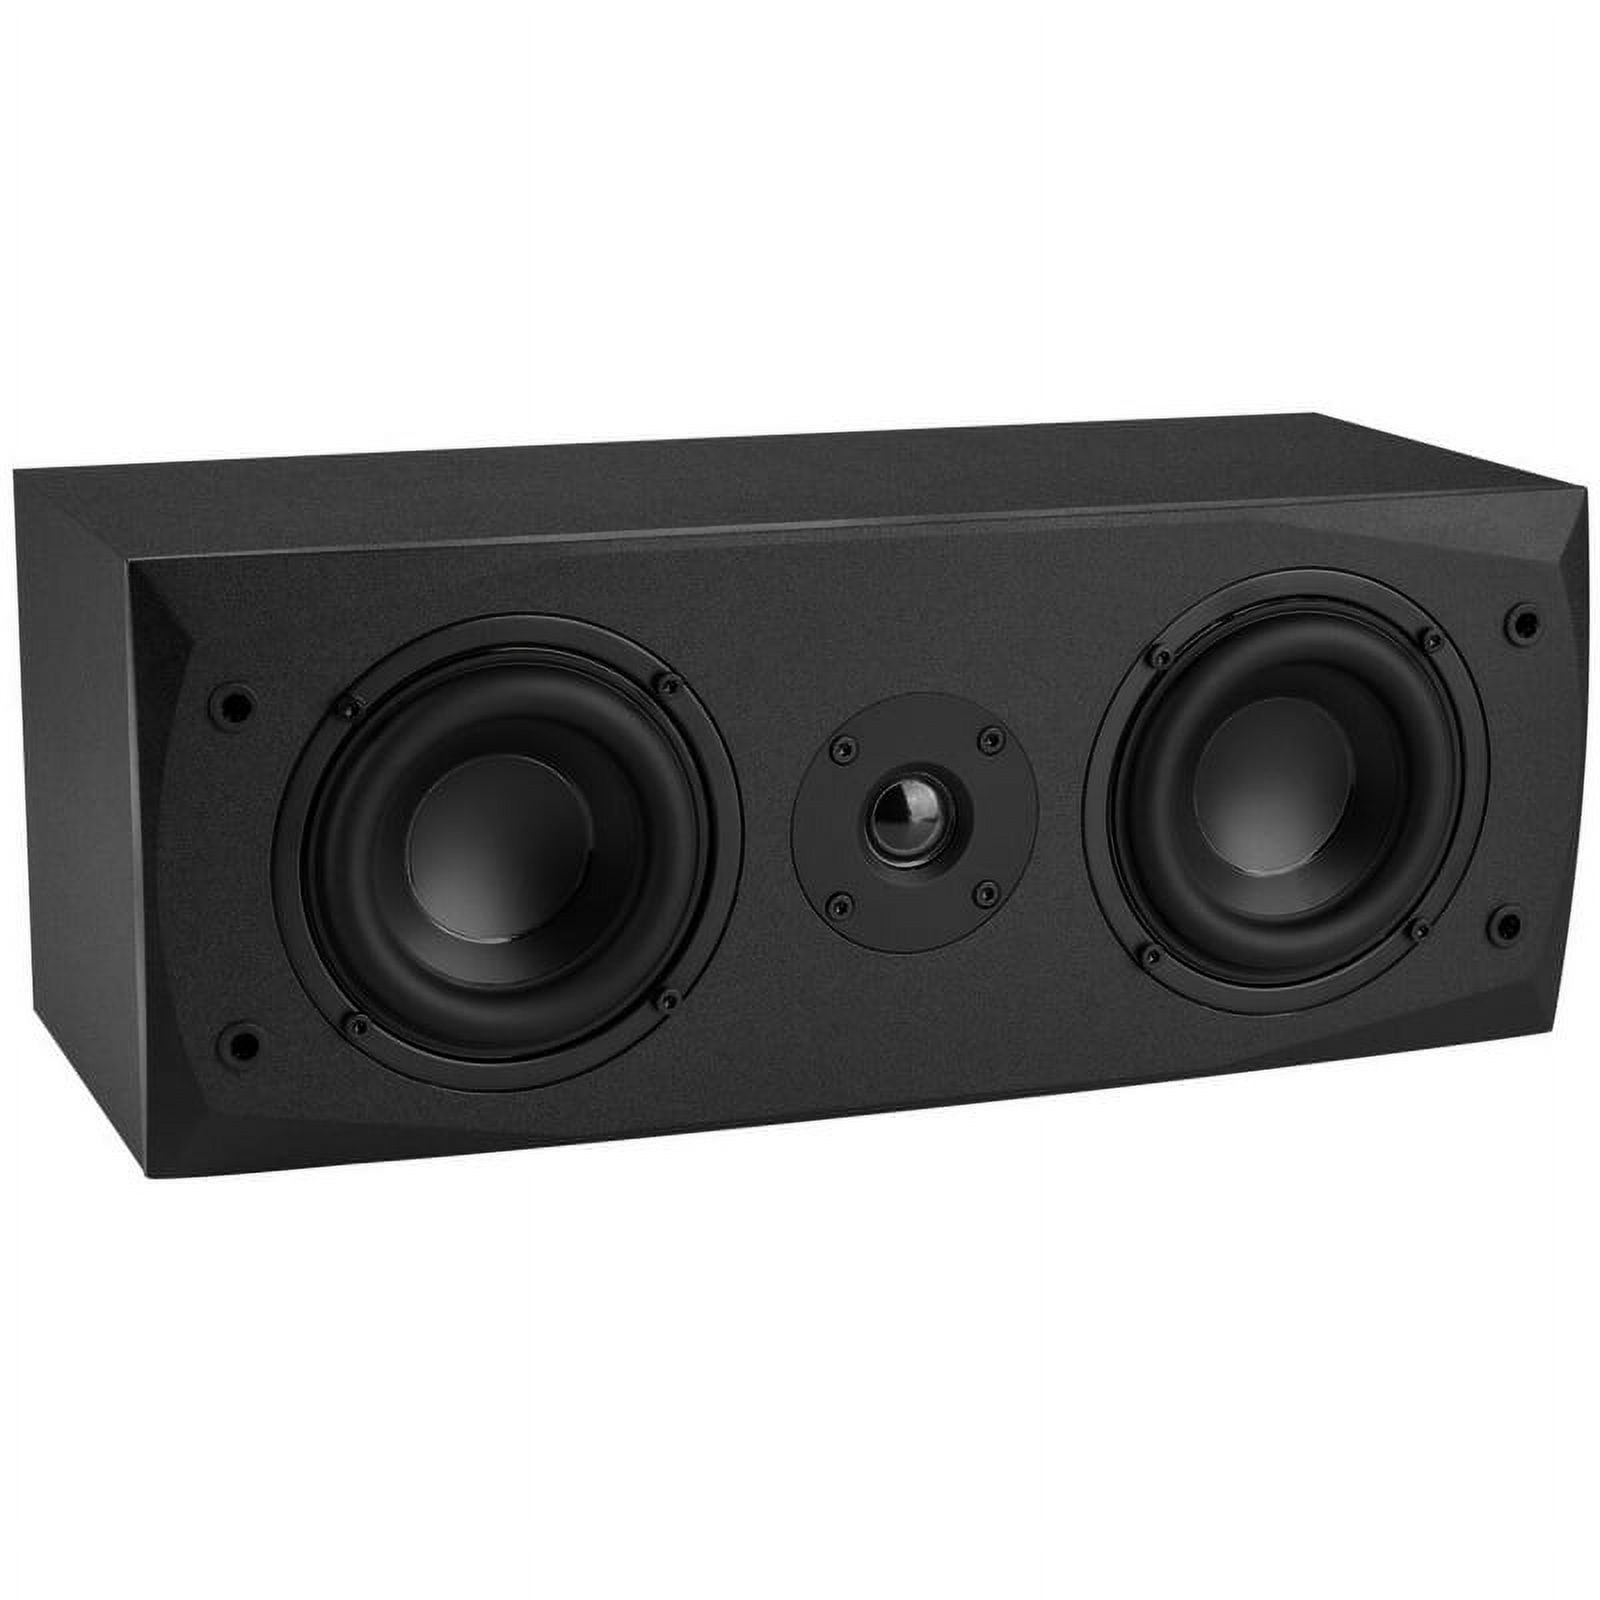 Dayton Audio MK442 Dual 4" 2-Way Center Channel Speaker - image 3 of 6